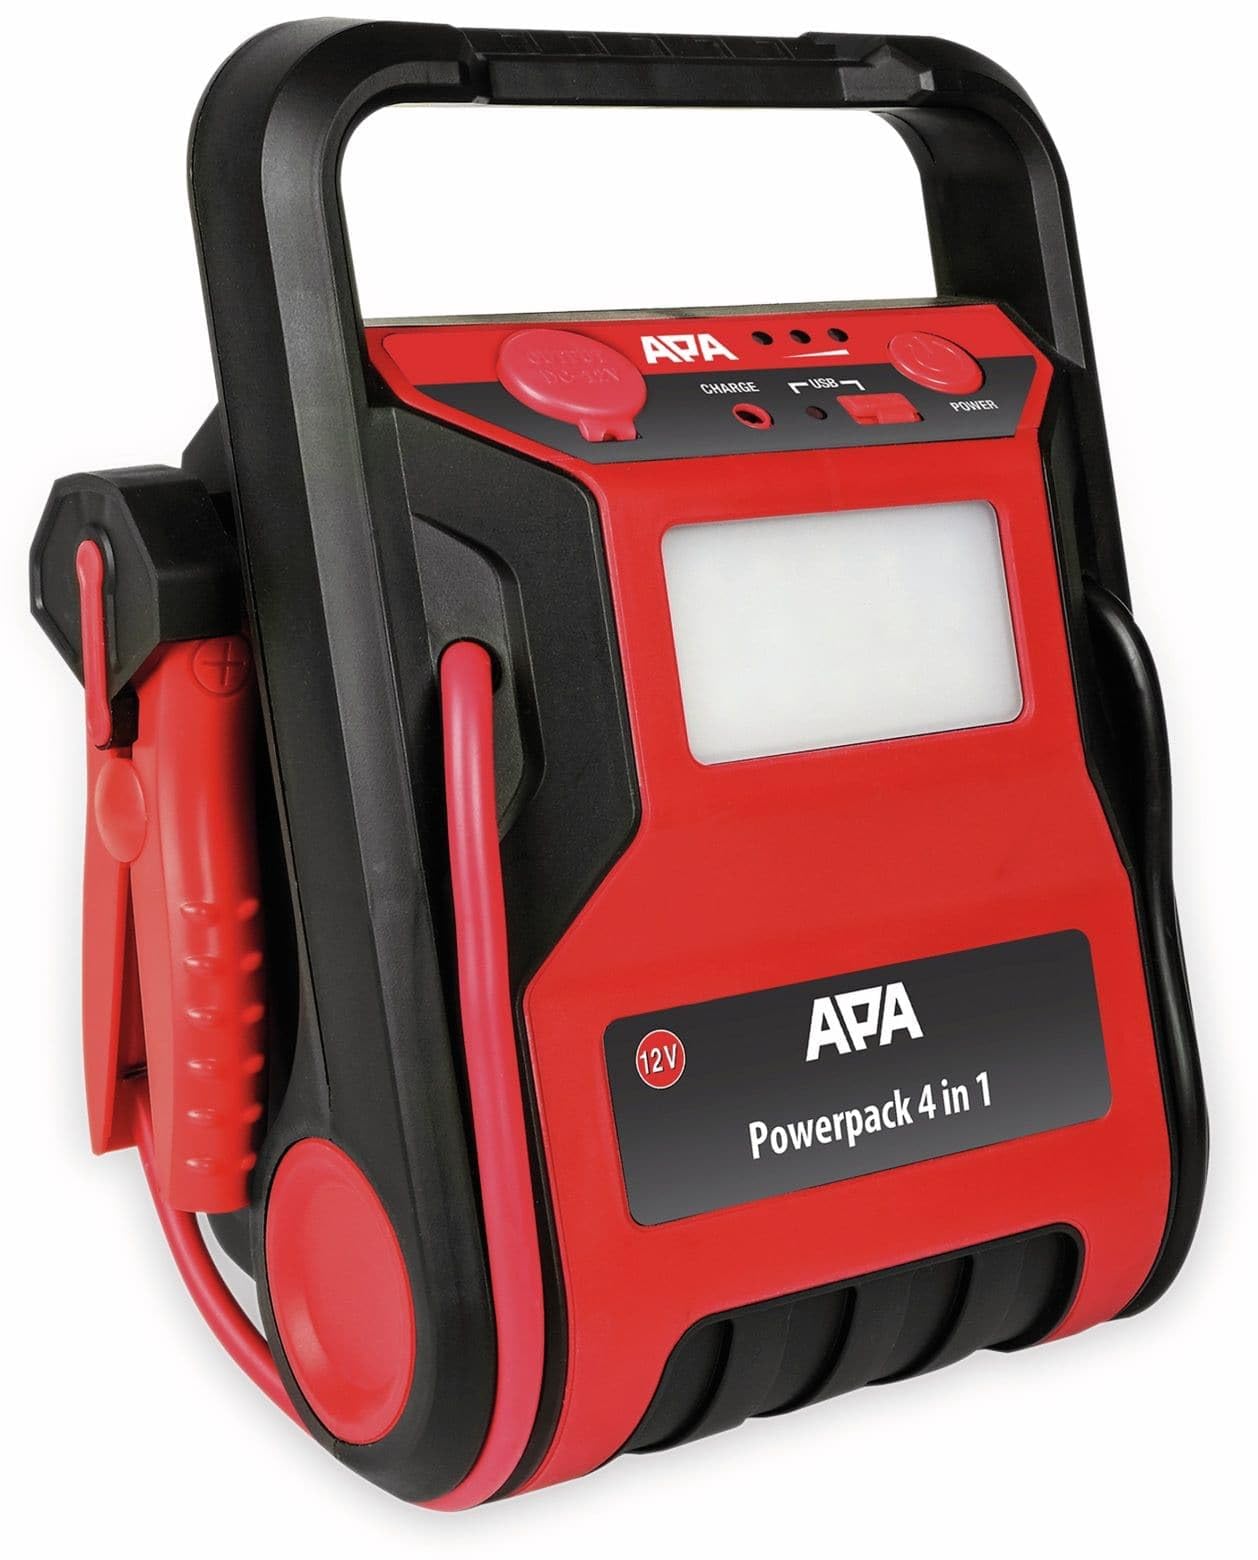 APA 16553 Starthilfe Power Pack, mit Kompressor, Arbeitsleuchte, Energiestation, 12V, 7000mAh